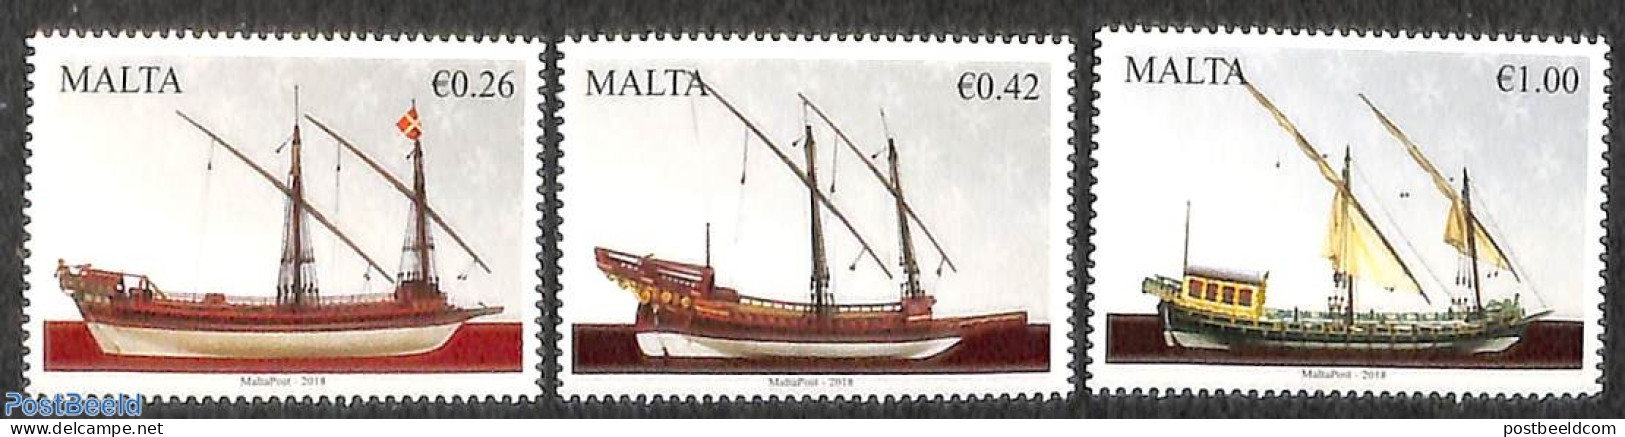 Malta 2018 Ships 3v, Mint NH, Transport - Ships And Boats - Ships